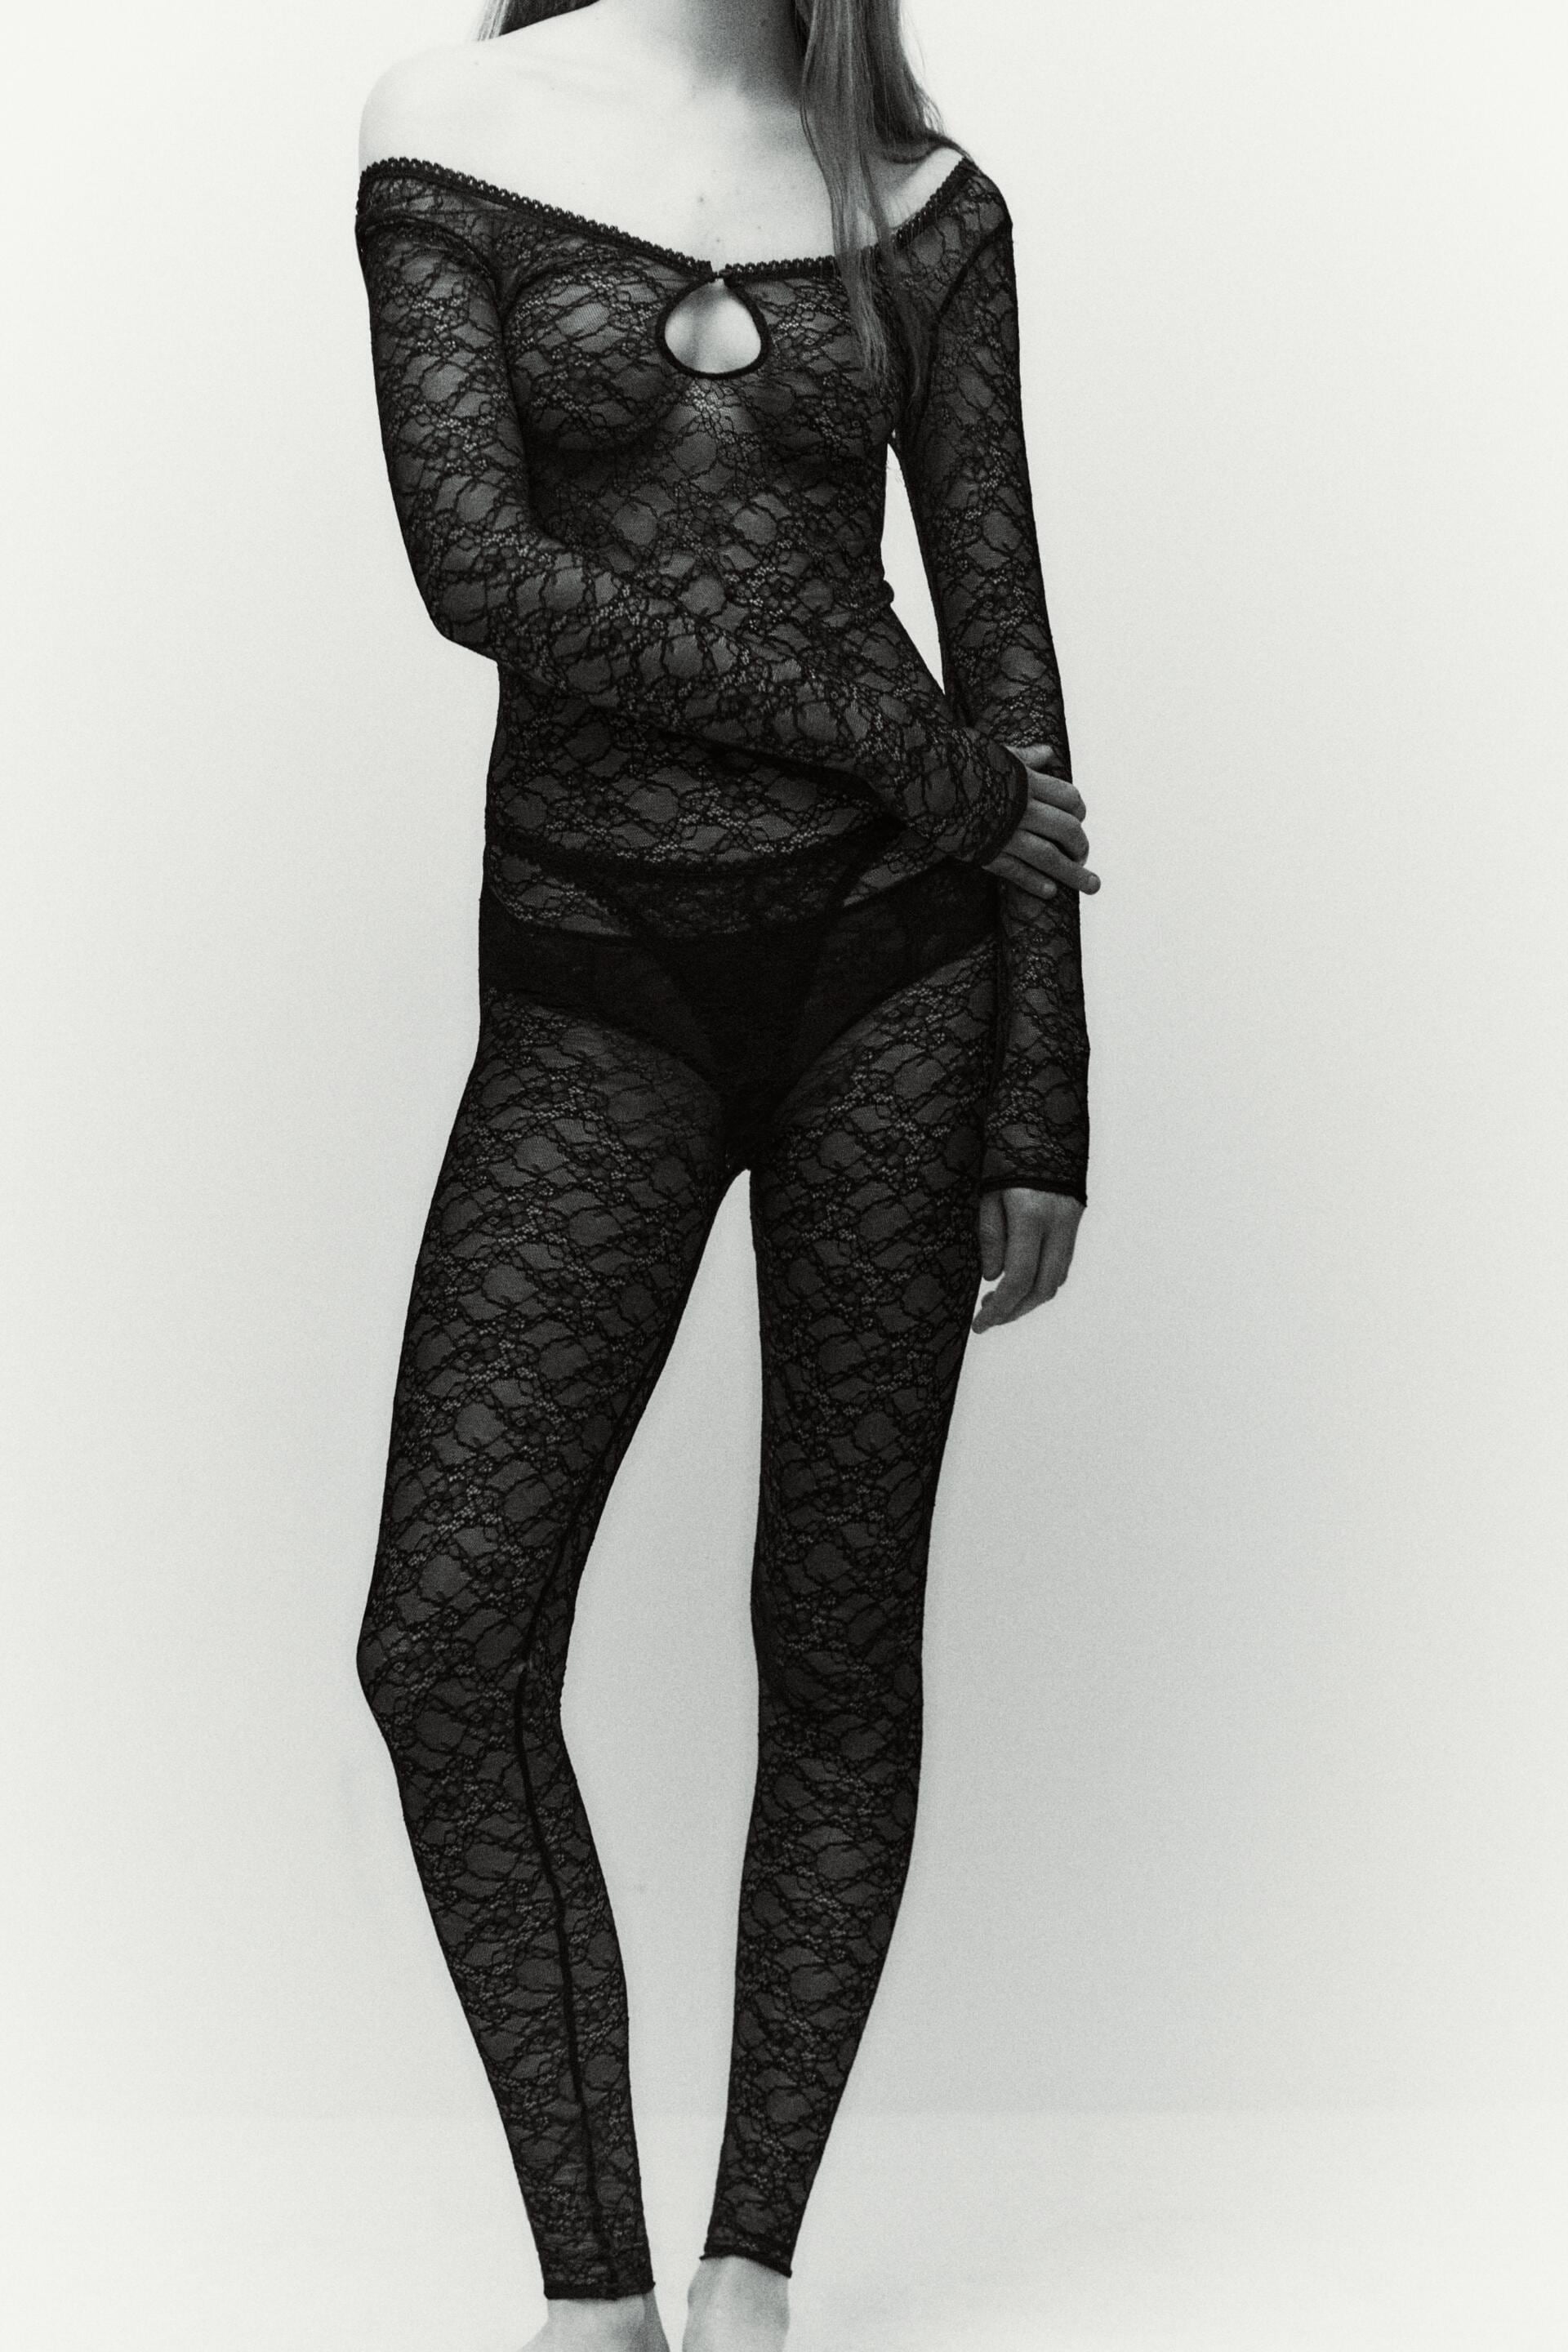 Don't Sleep on Zara's Full Figure Fashion — Typical BlaQueen